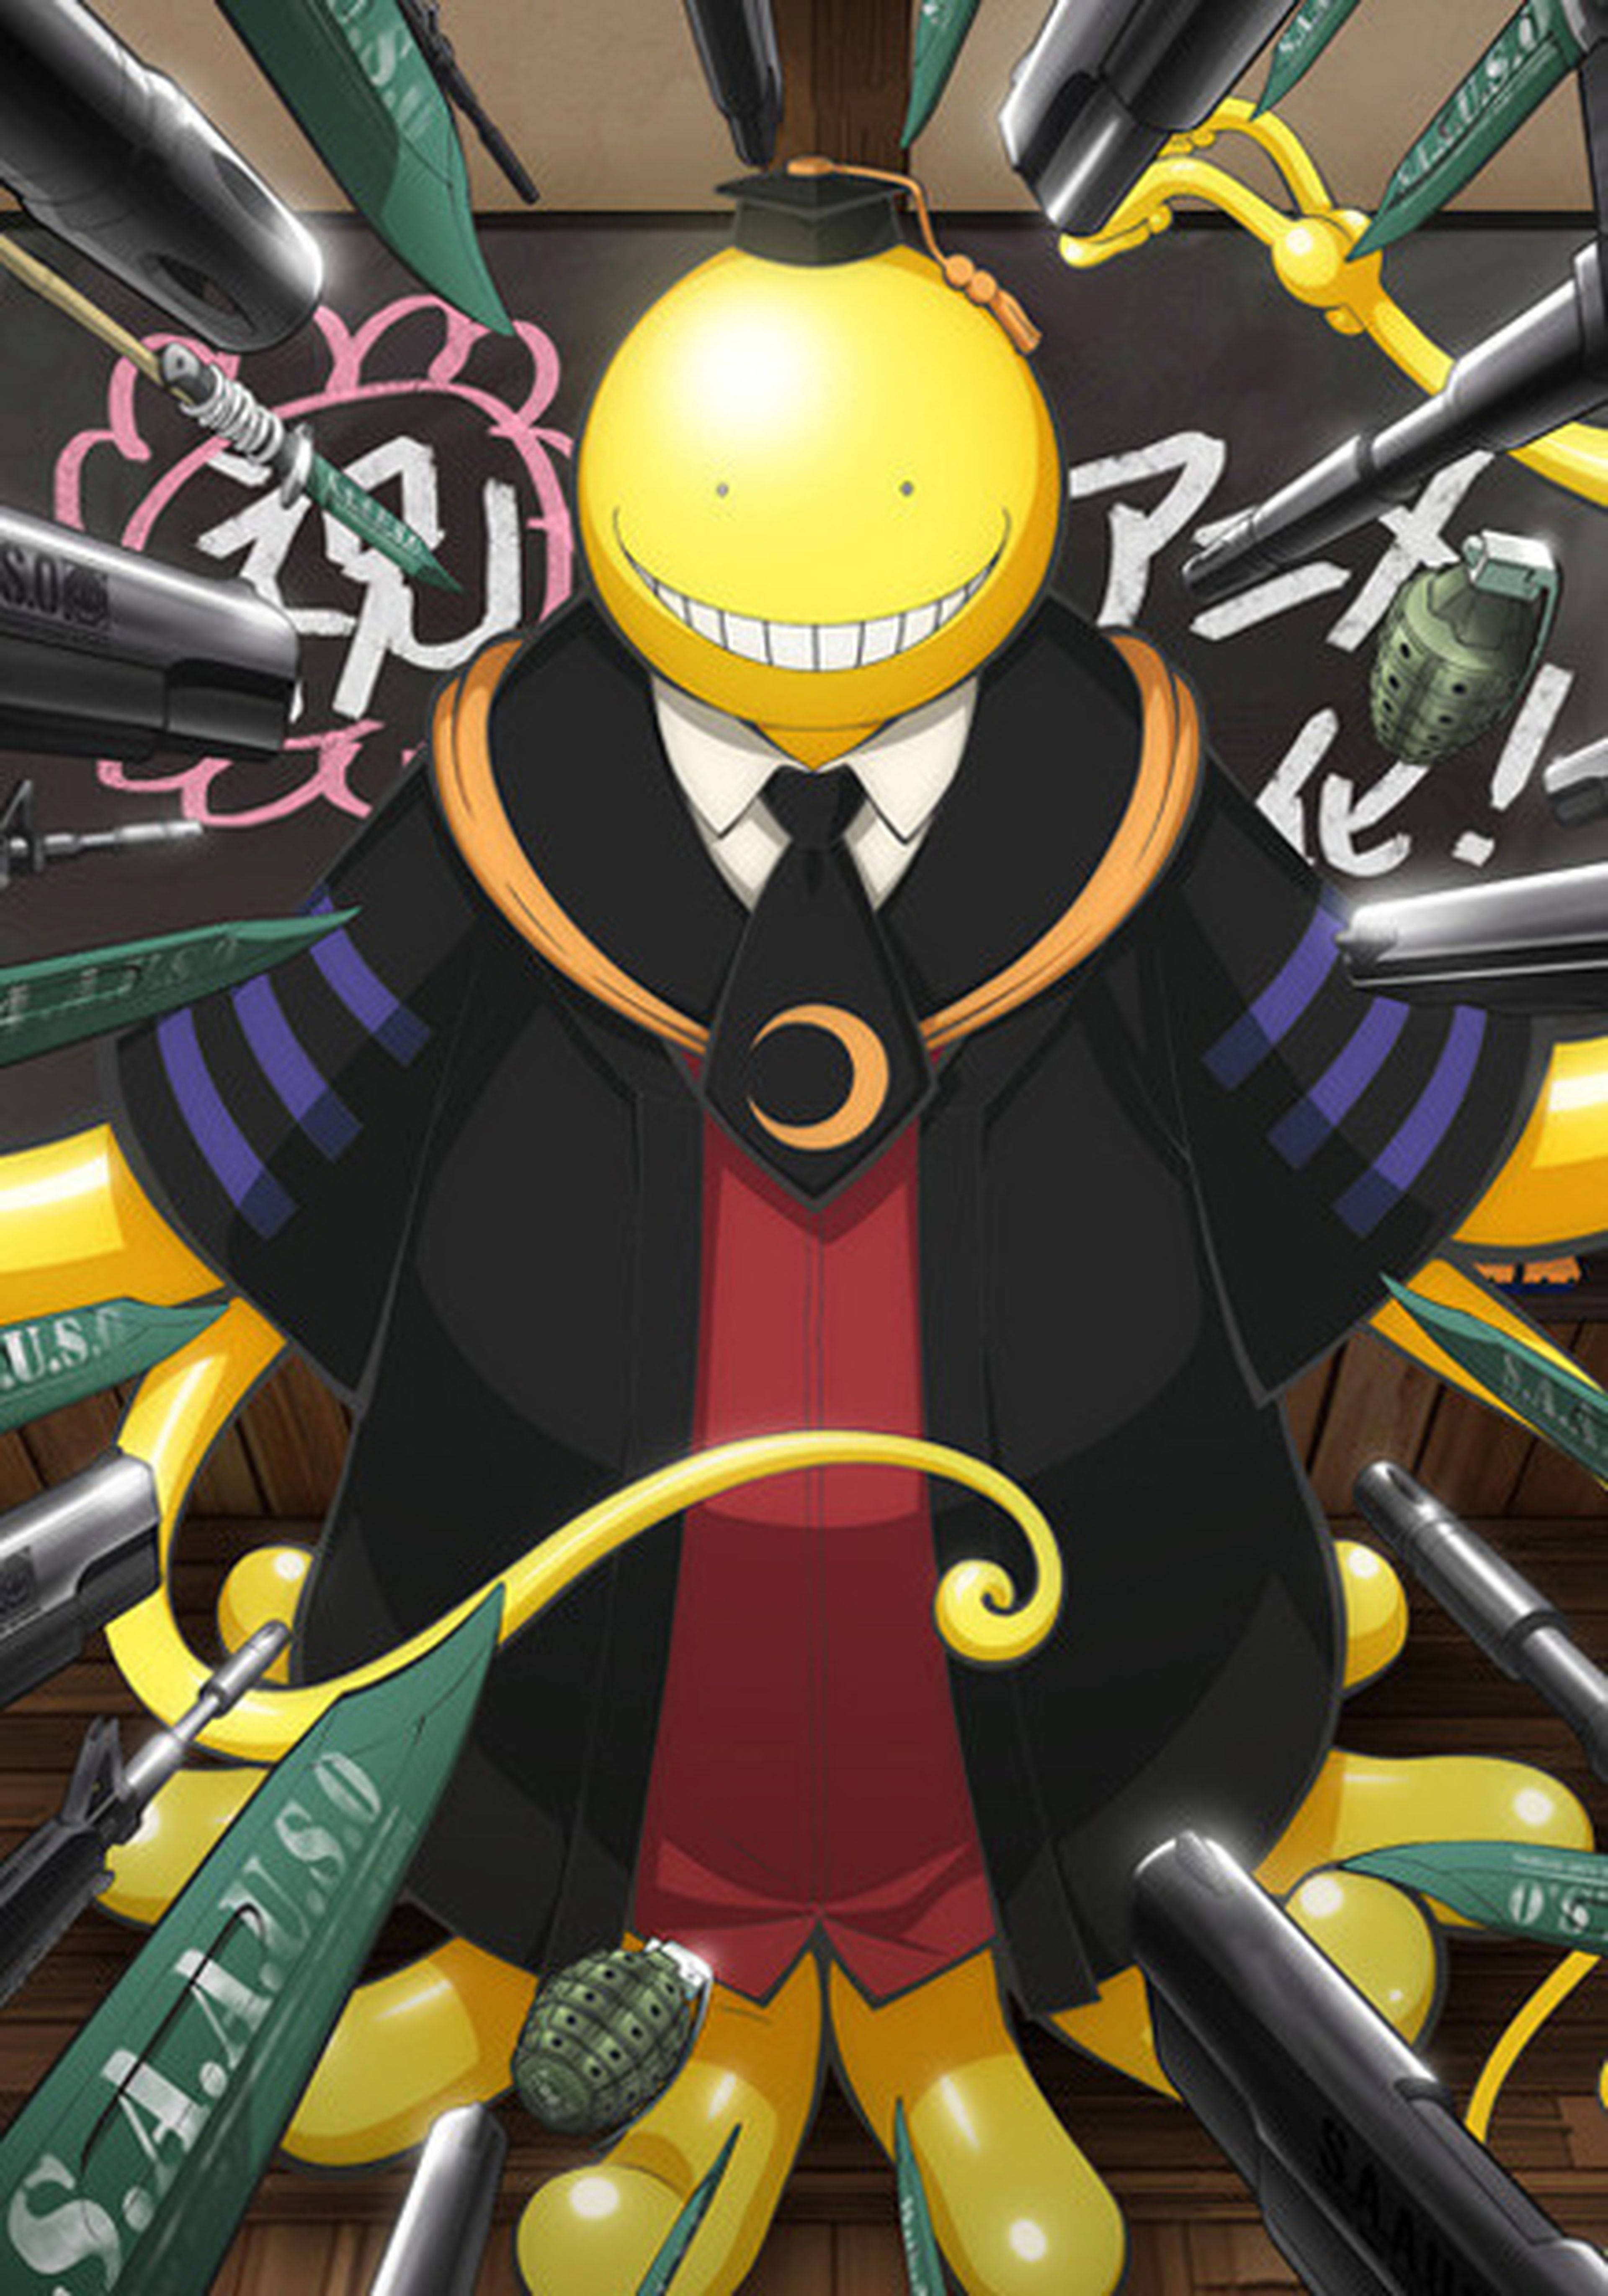 Primera imagen del anime Assassination Classroom